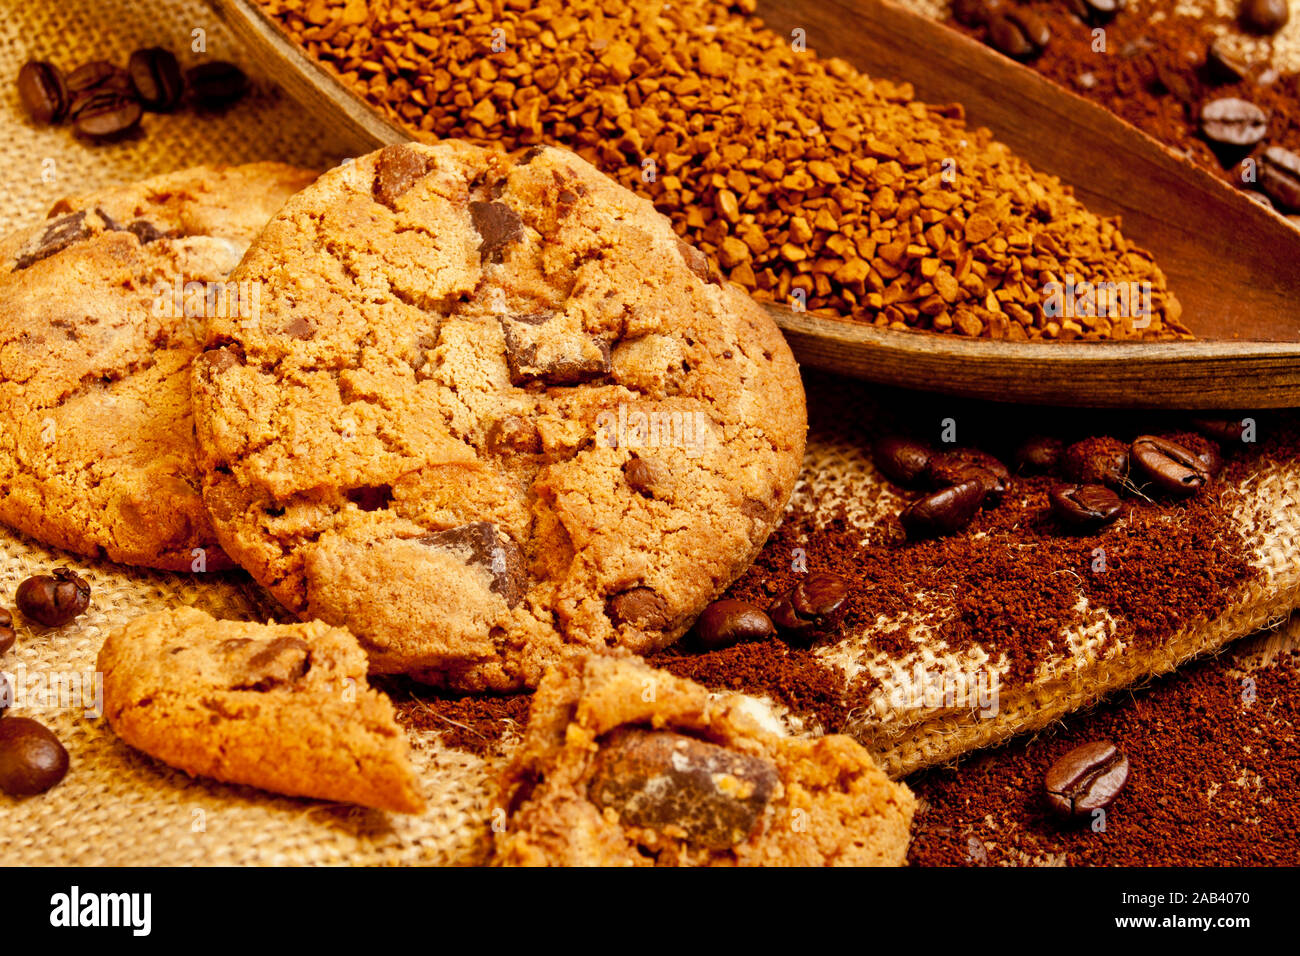 Cookies mit Kaffeebohnen, Kaffeepulver und Instantkaffee |Cookies with coffee beans, ground coffee and instant coffee| Stock Photo